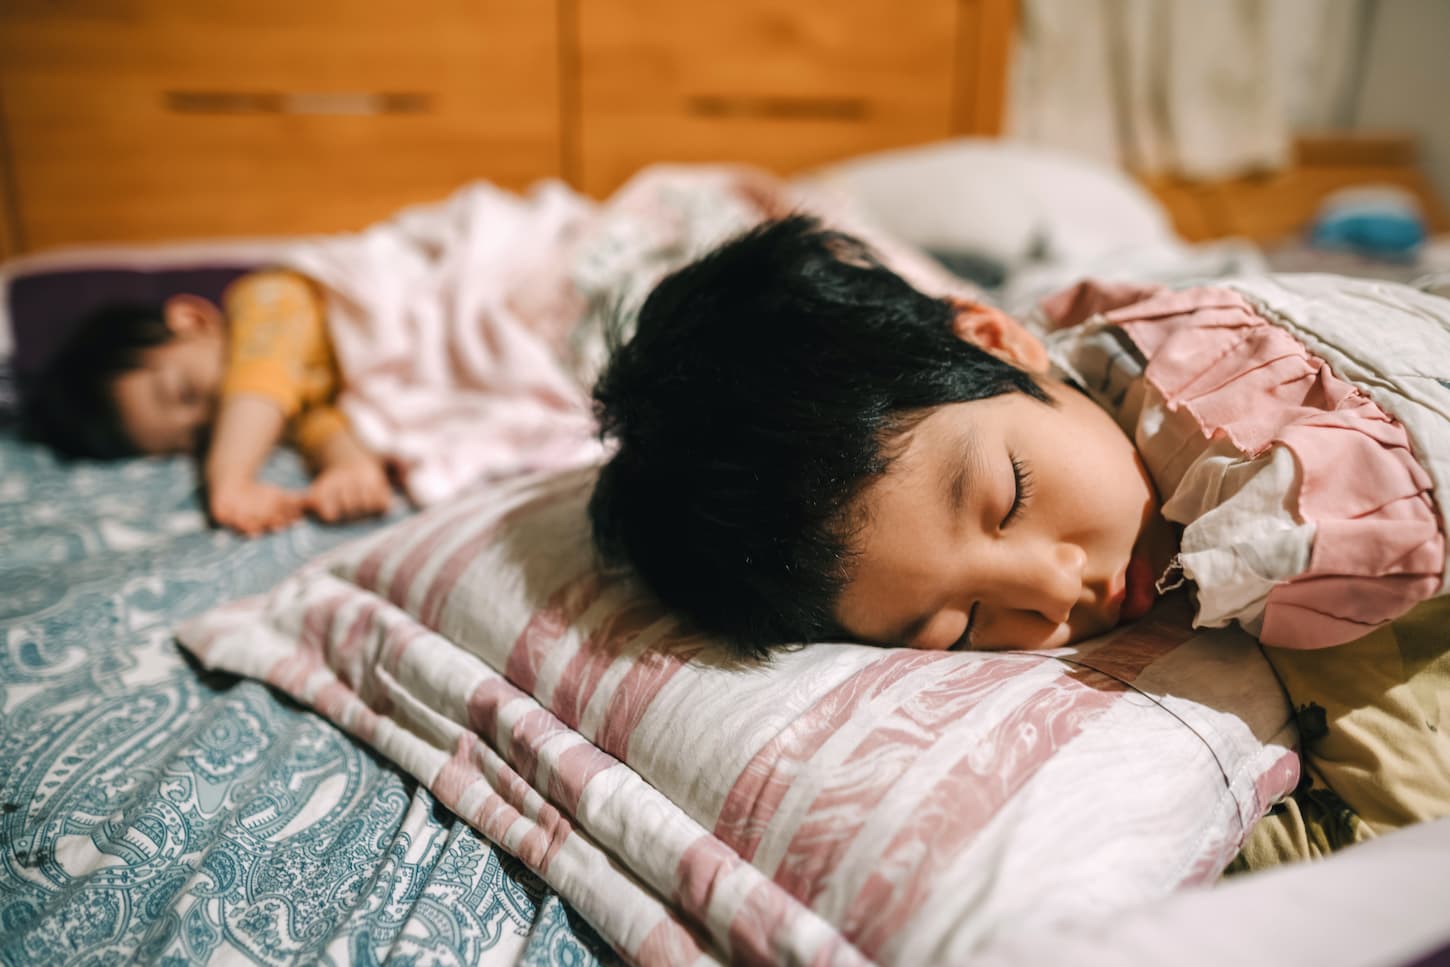 An image of kids between 1-3 years old sleeping in bed.